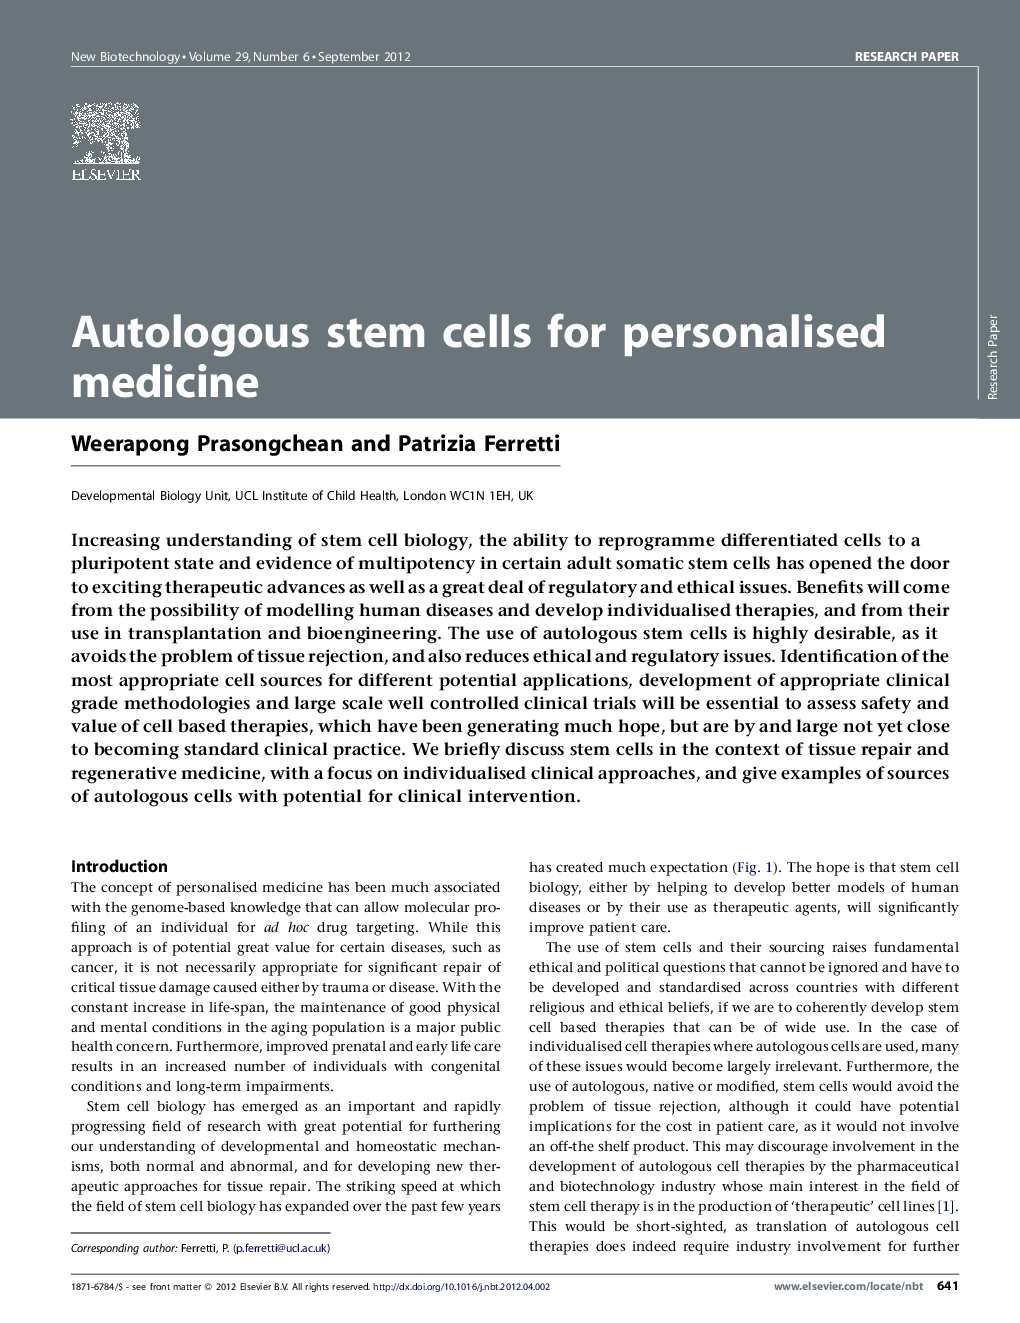 Autologous stem cells for personalised medicine